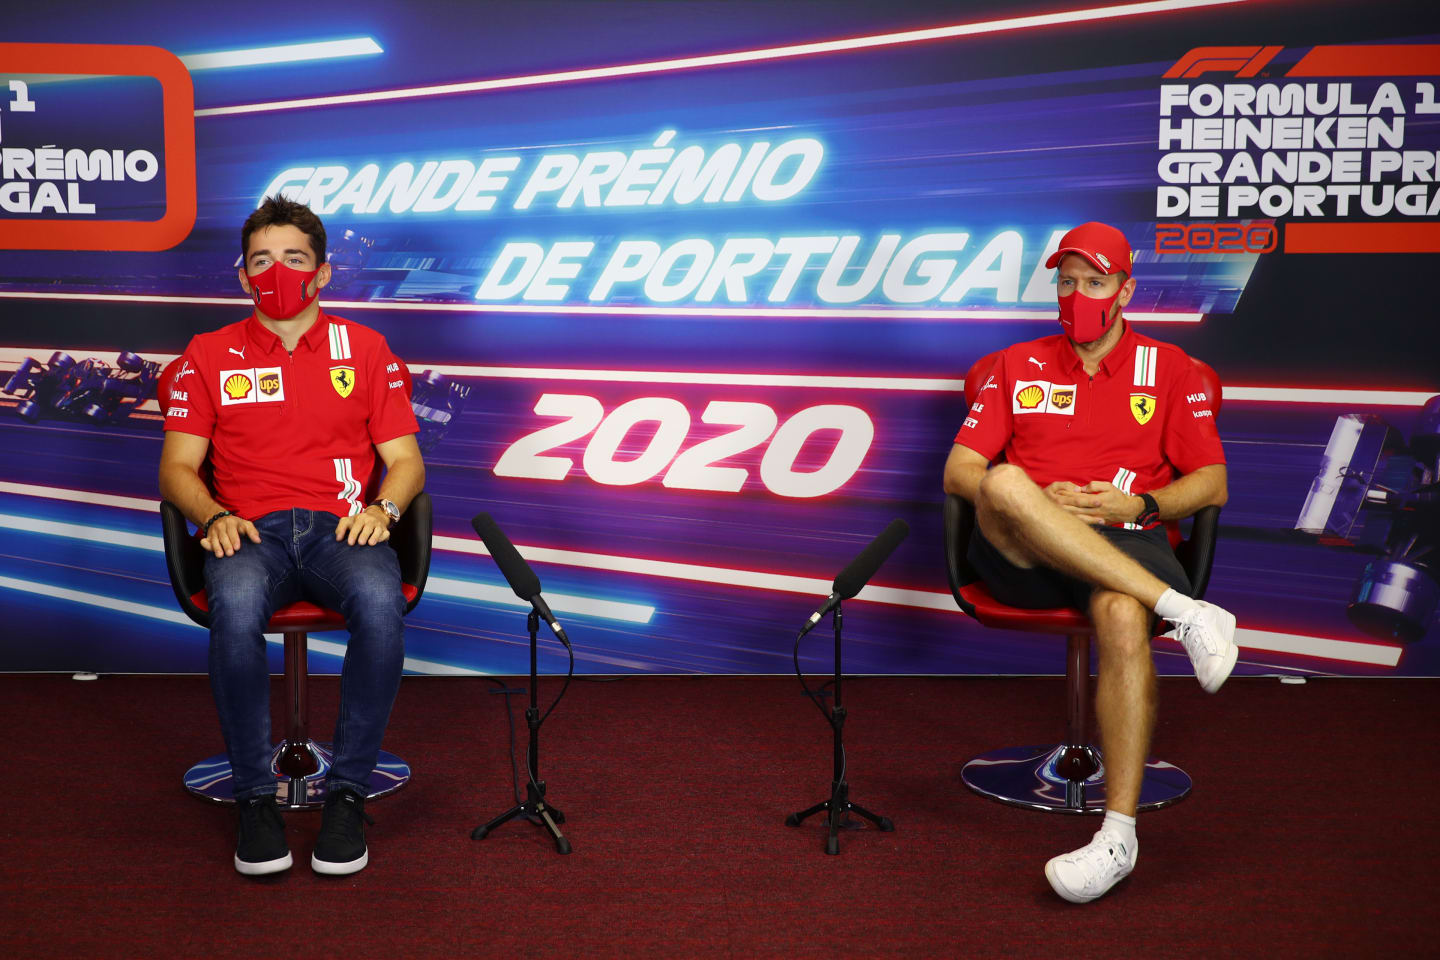 PORTIMAO, PORTUGAL - OCTOBER 22: Charles Leclerc of Monaco and Ferrari and Sebastian Vettel of